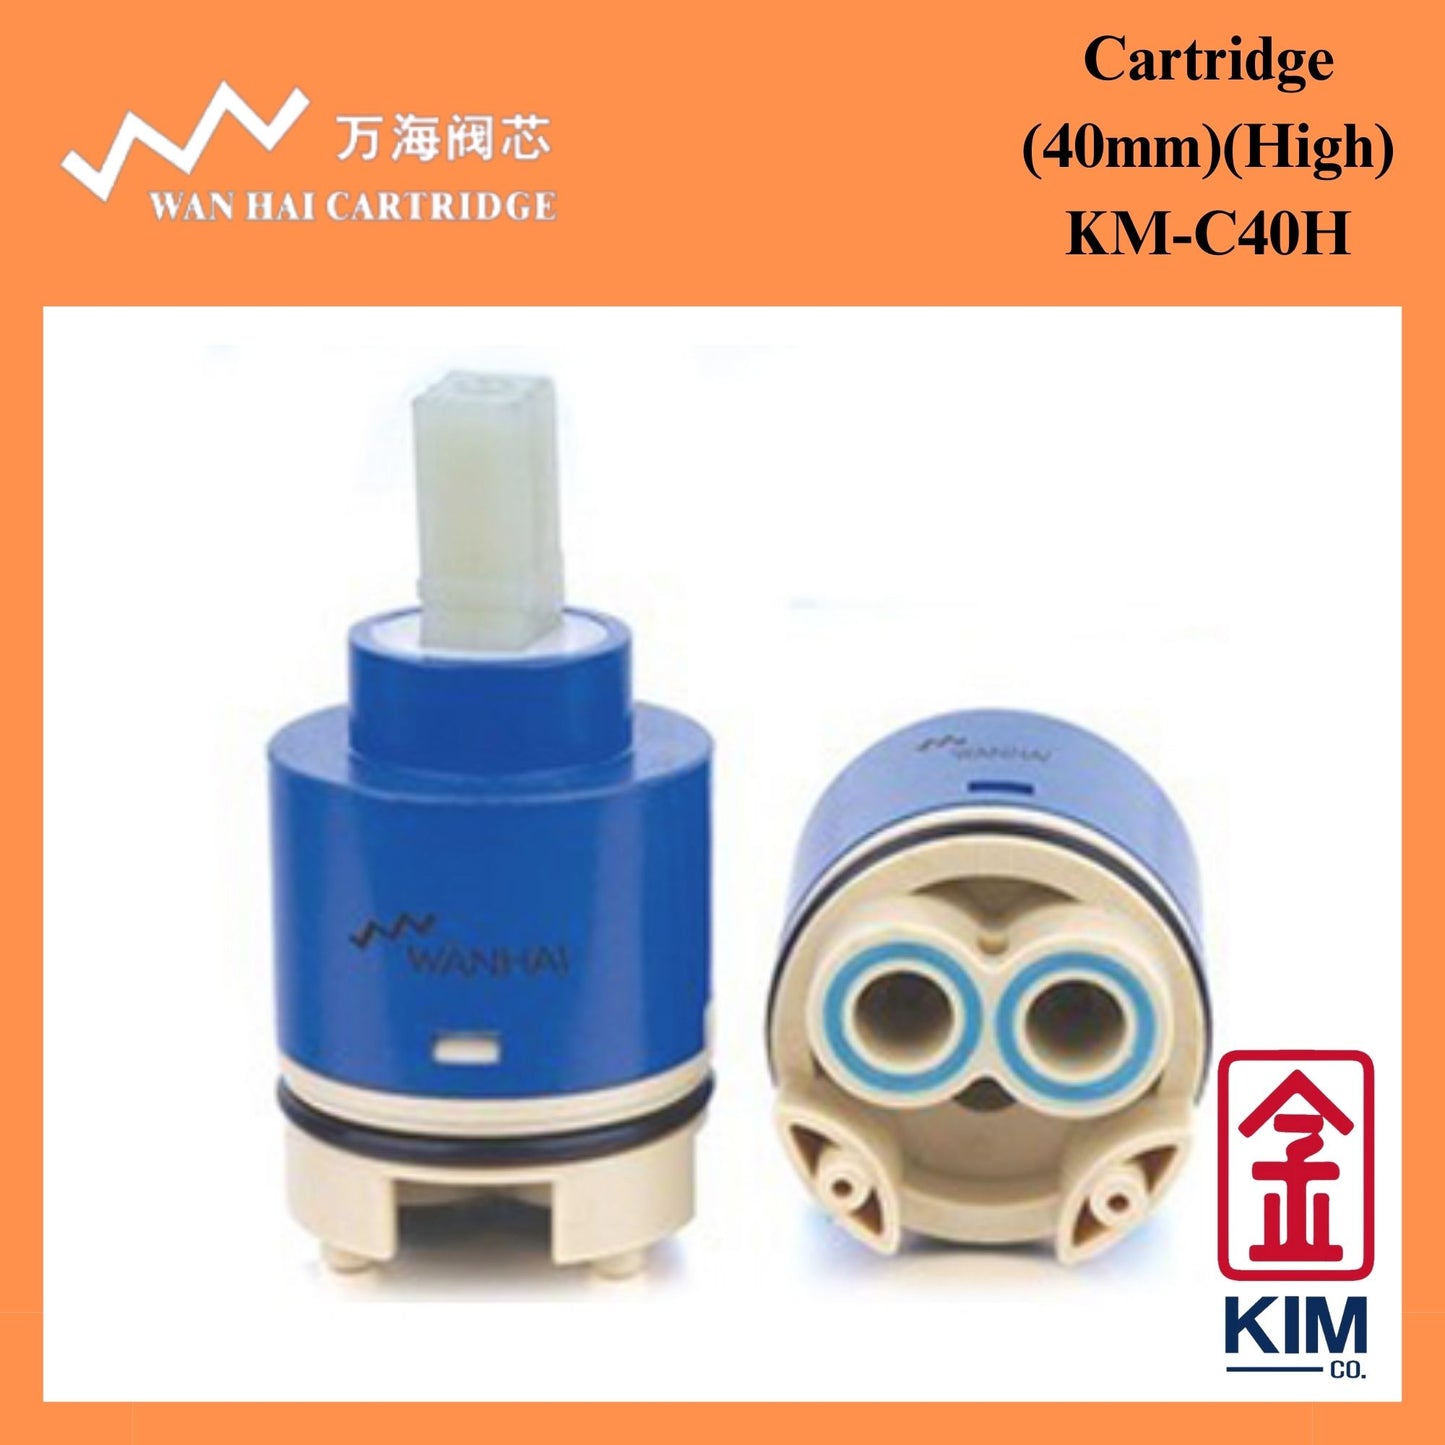 WanHai 40mm Cartridge (KM-C40H) (High)